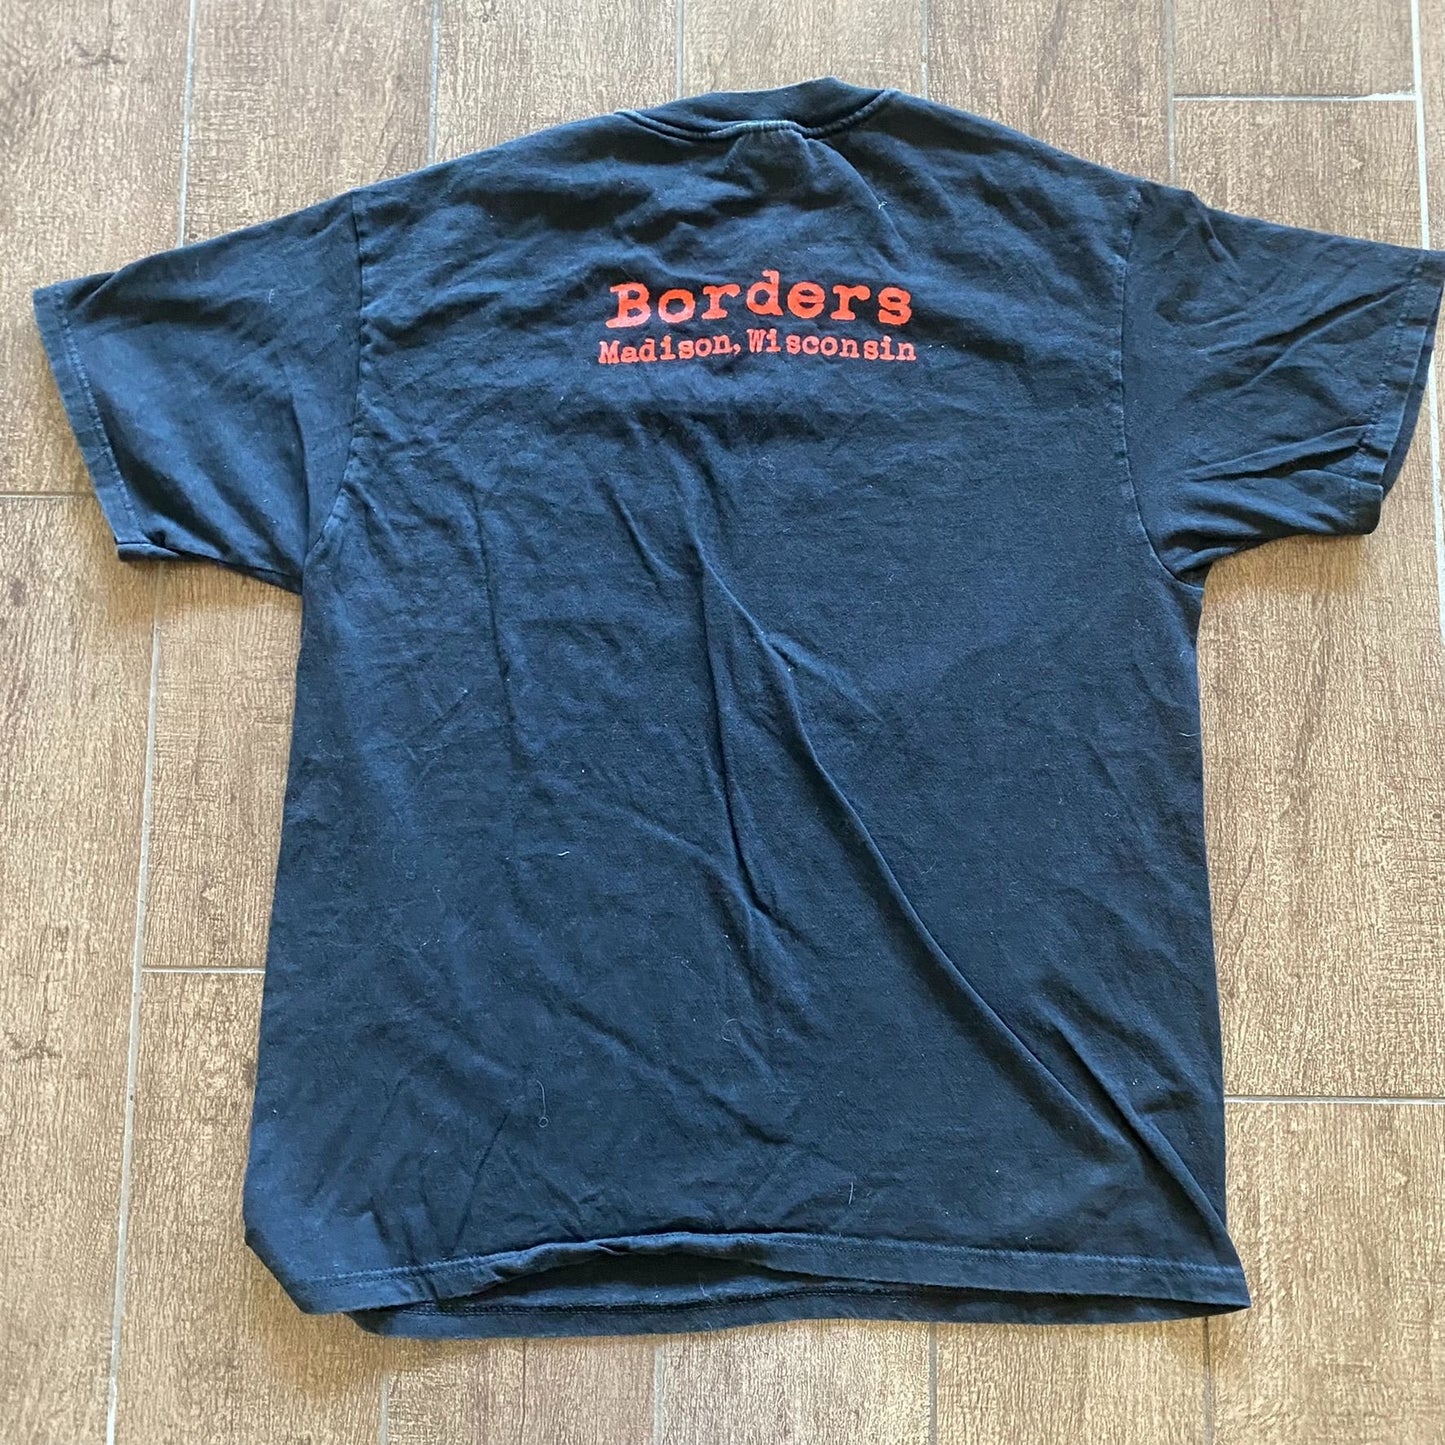 Borders Literature Vintage T-Shirt